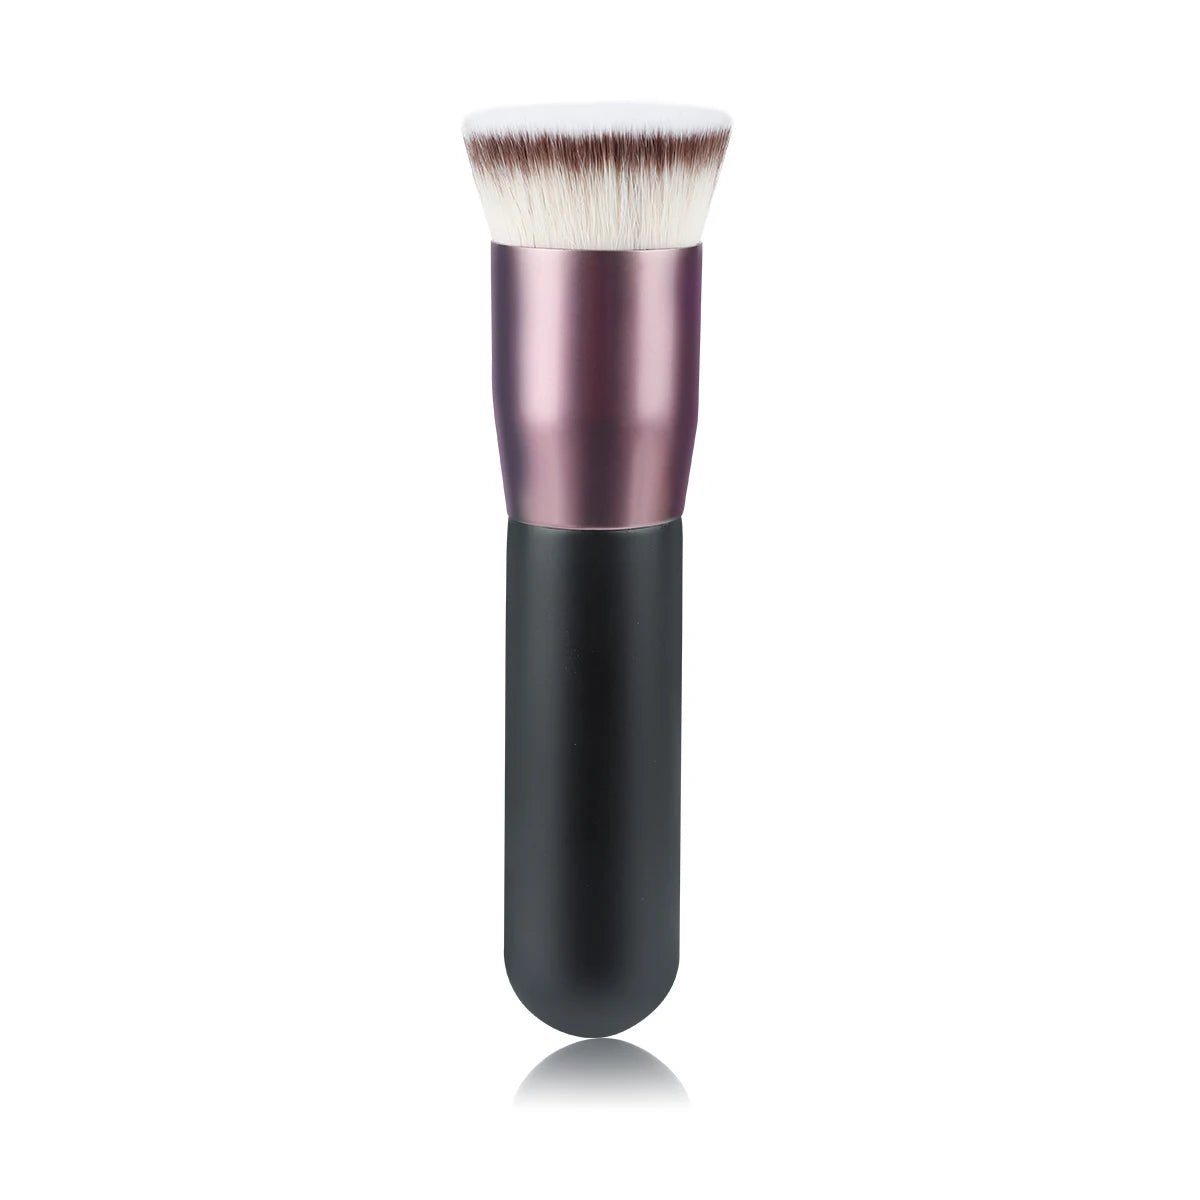 1Pcs Professional Flat Makeup Brushes Powder Liquid Foundation Blush Brush Concealer Contour Facial Make up Brushes Tool ShopOnlyDeal